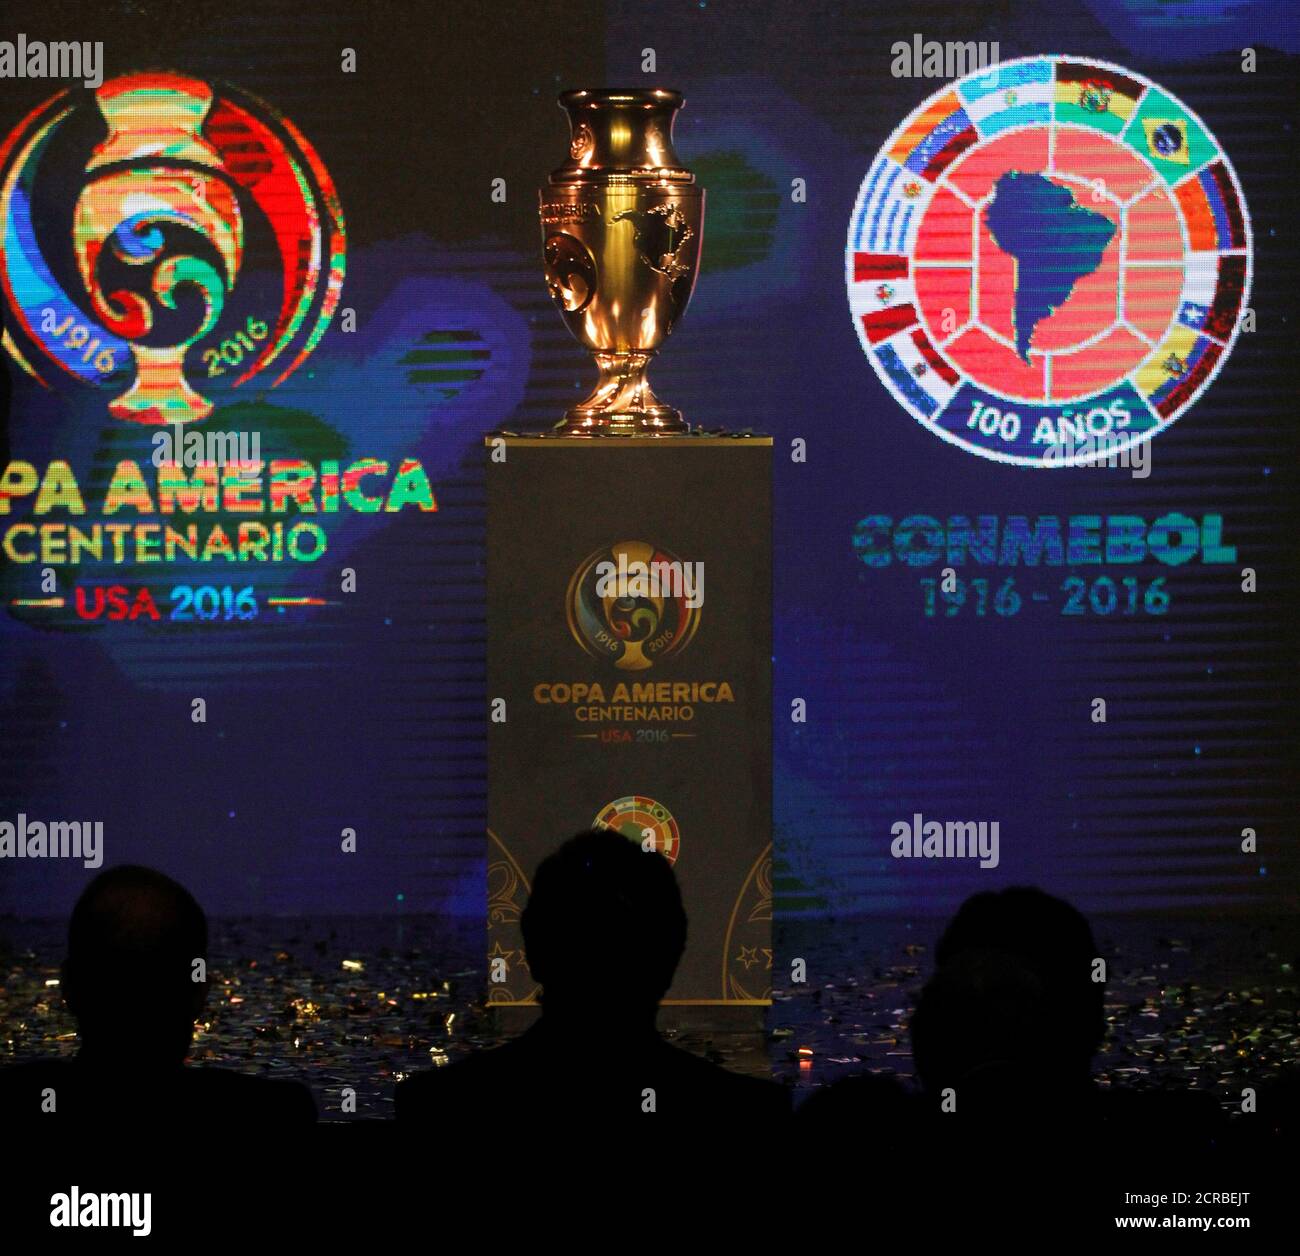 USA 2016 Copa America Centenario Group Games Scarf one szie 